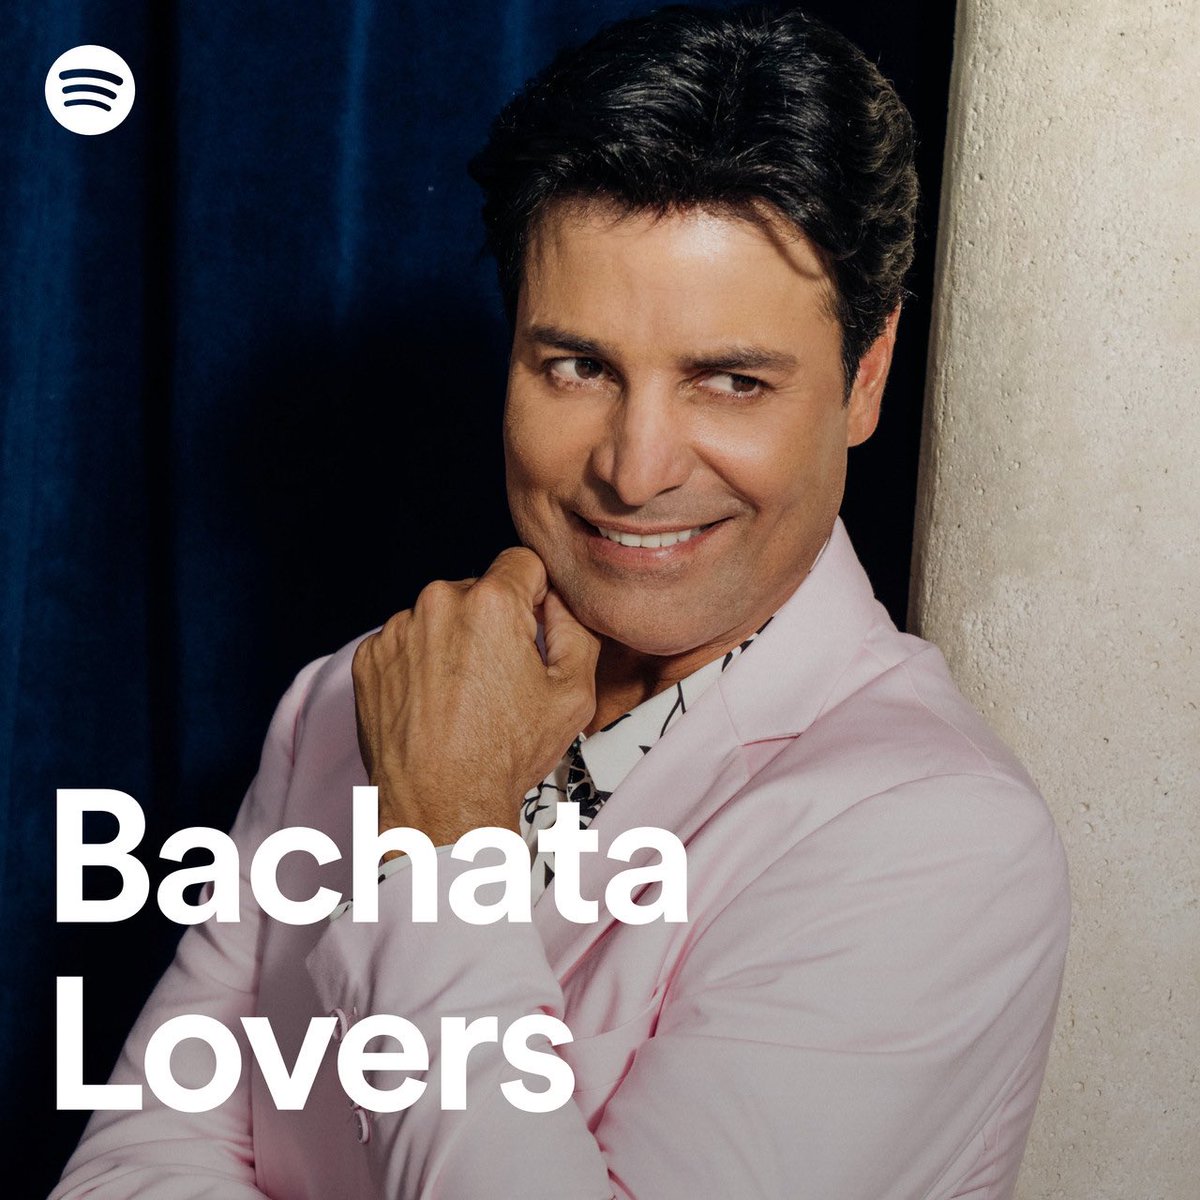 Bachata Lovers, reportense porque en @Spotify estamos #BailandoBachata todo el día ✨